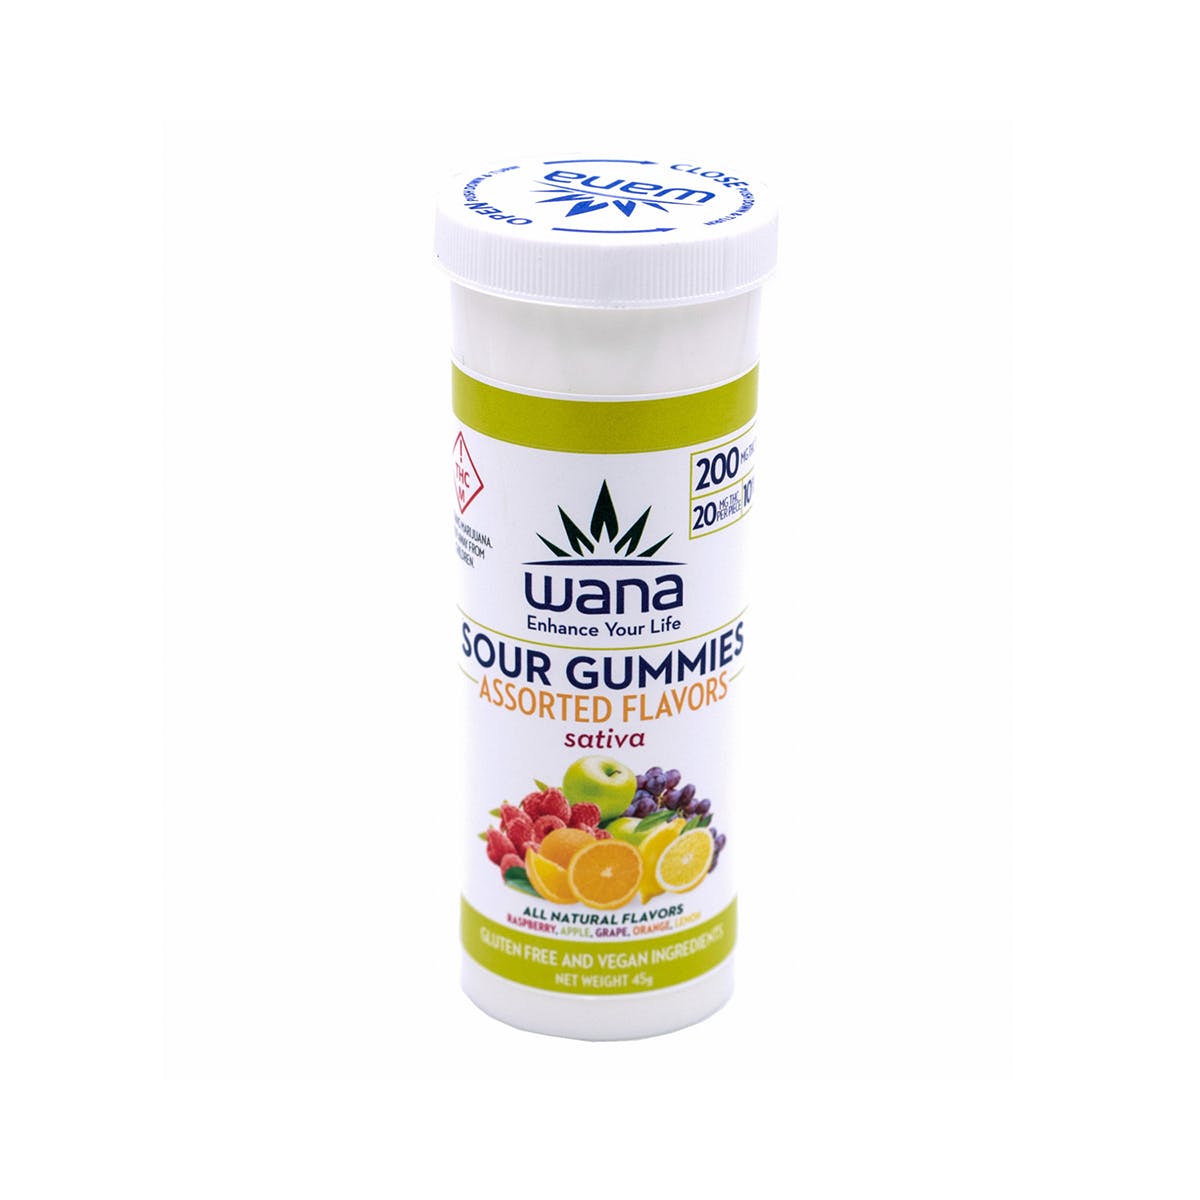 marijuana-dispensaries-the-herbal-center-broadway-rec-in-denver-sour-assorted-gummies-200mg-sativa-med